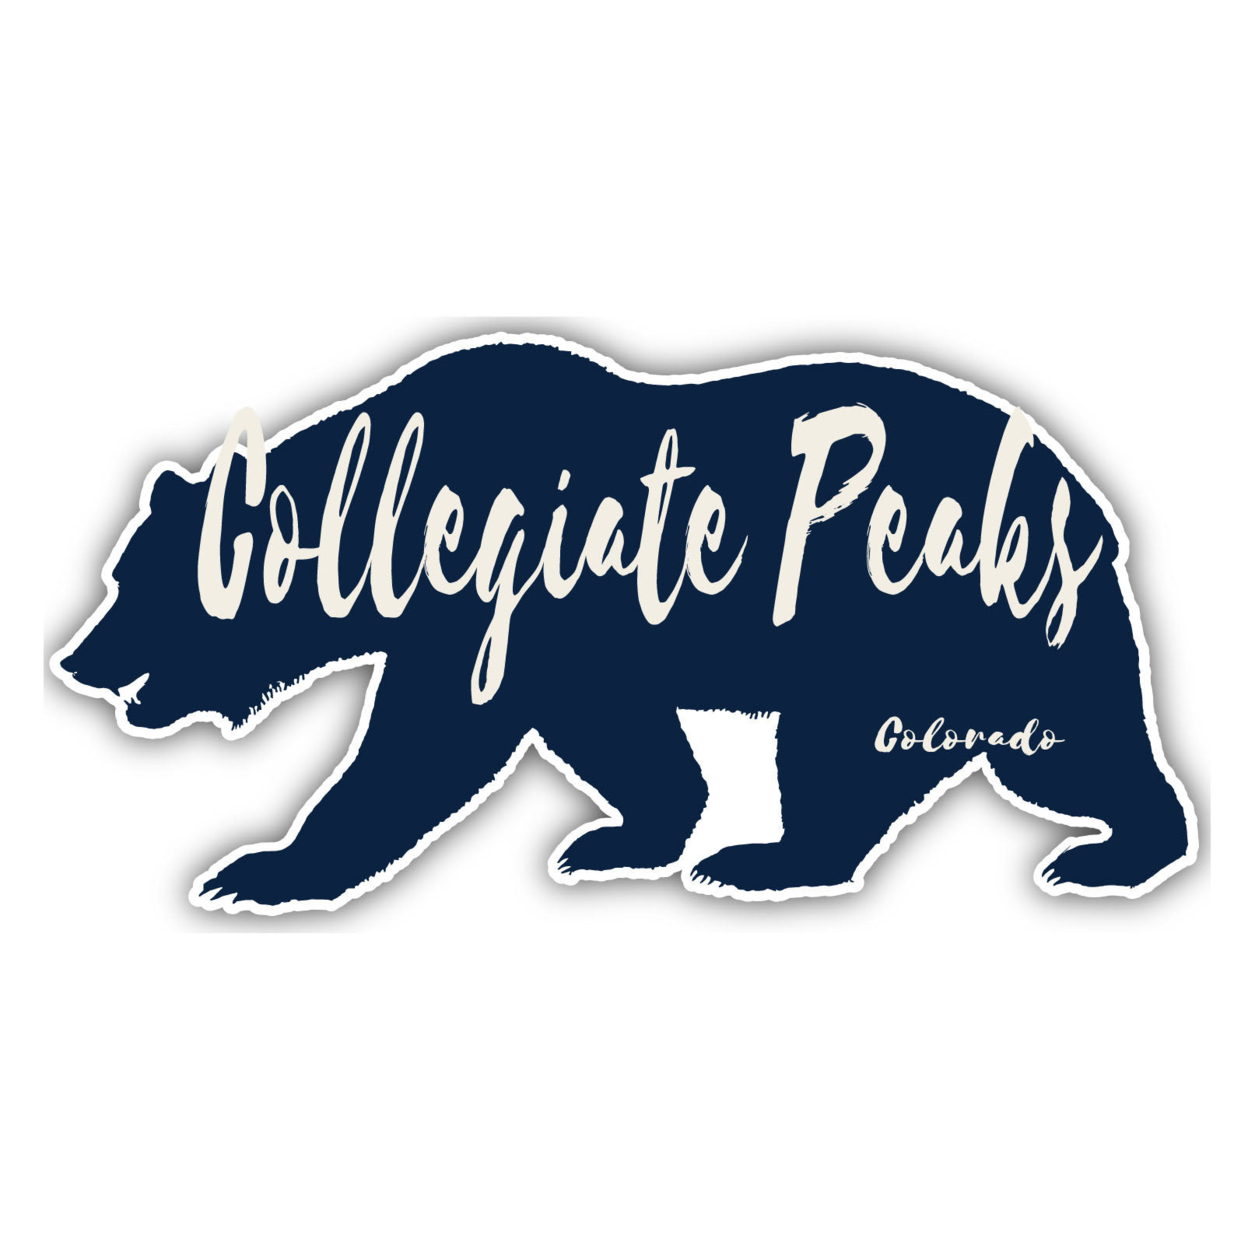 Collegiate Peaks Colorado Souvenir Decorative Stickers (Choose Theme And Size) - Single Unit, 8-Inch, Tent